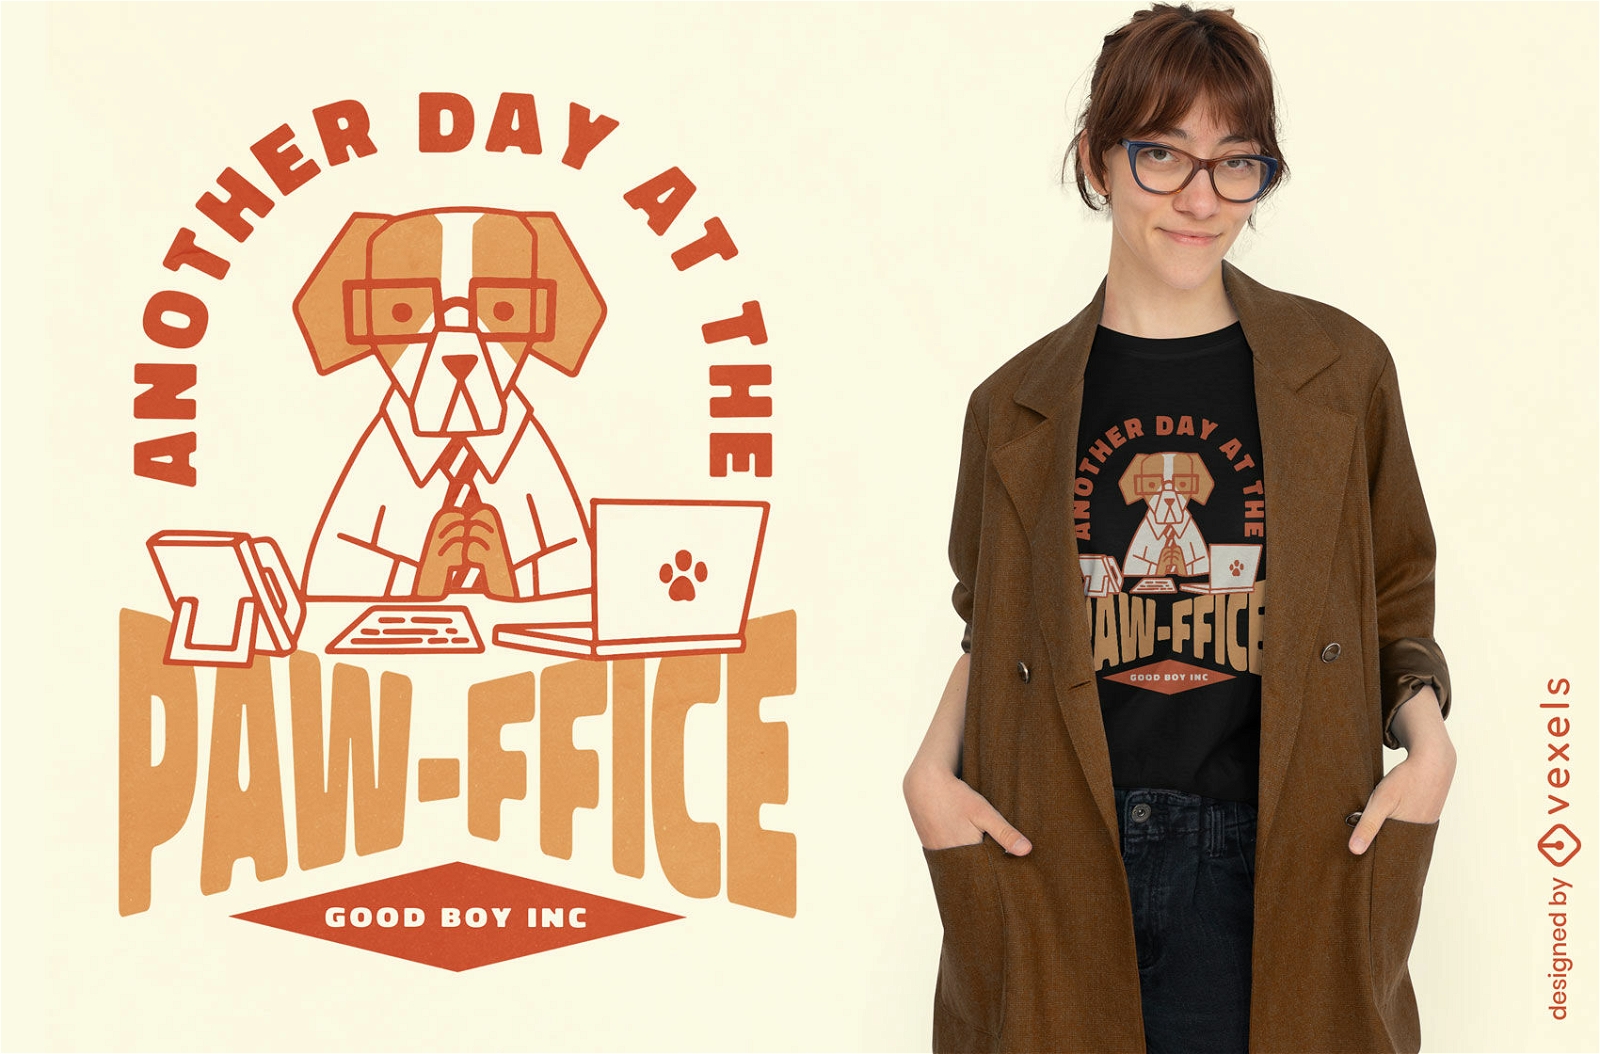 Office dog pawffice t-shirt design